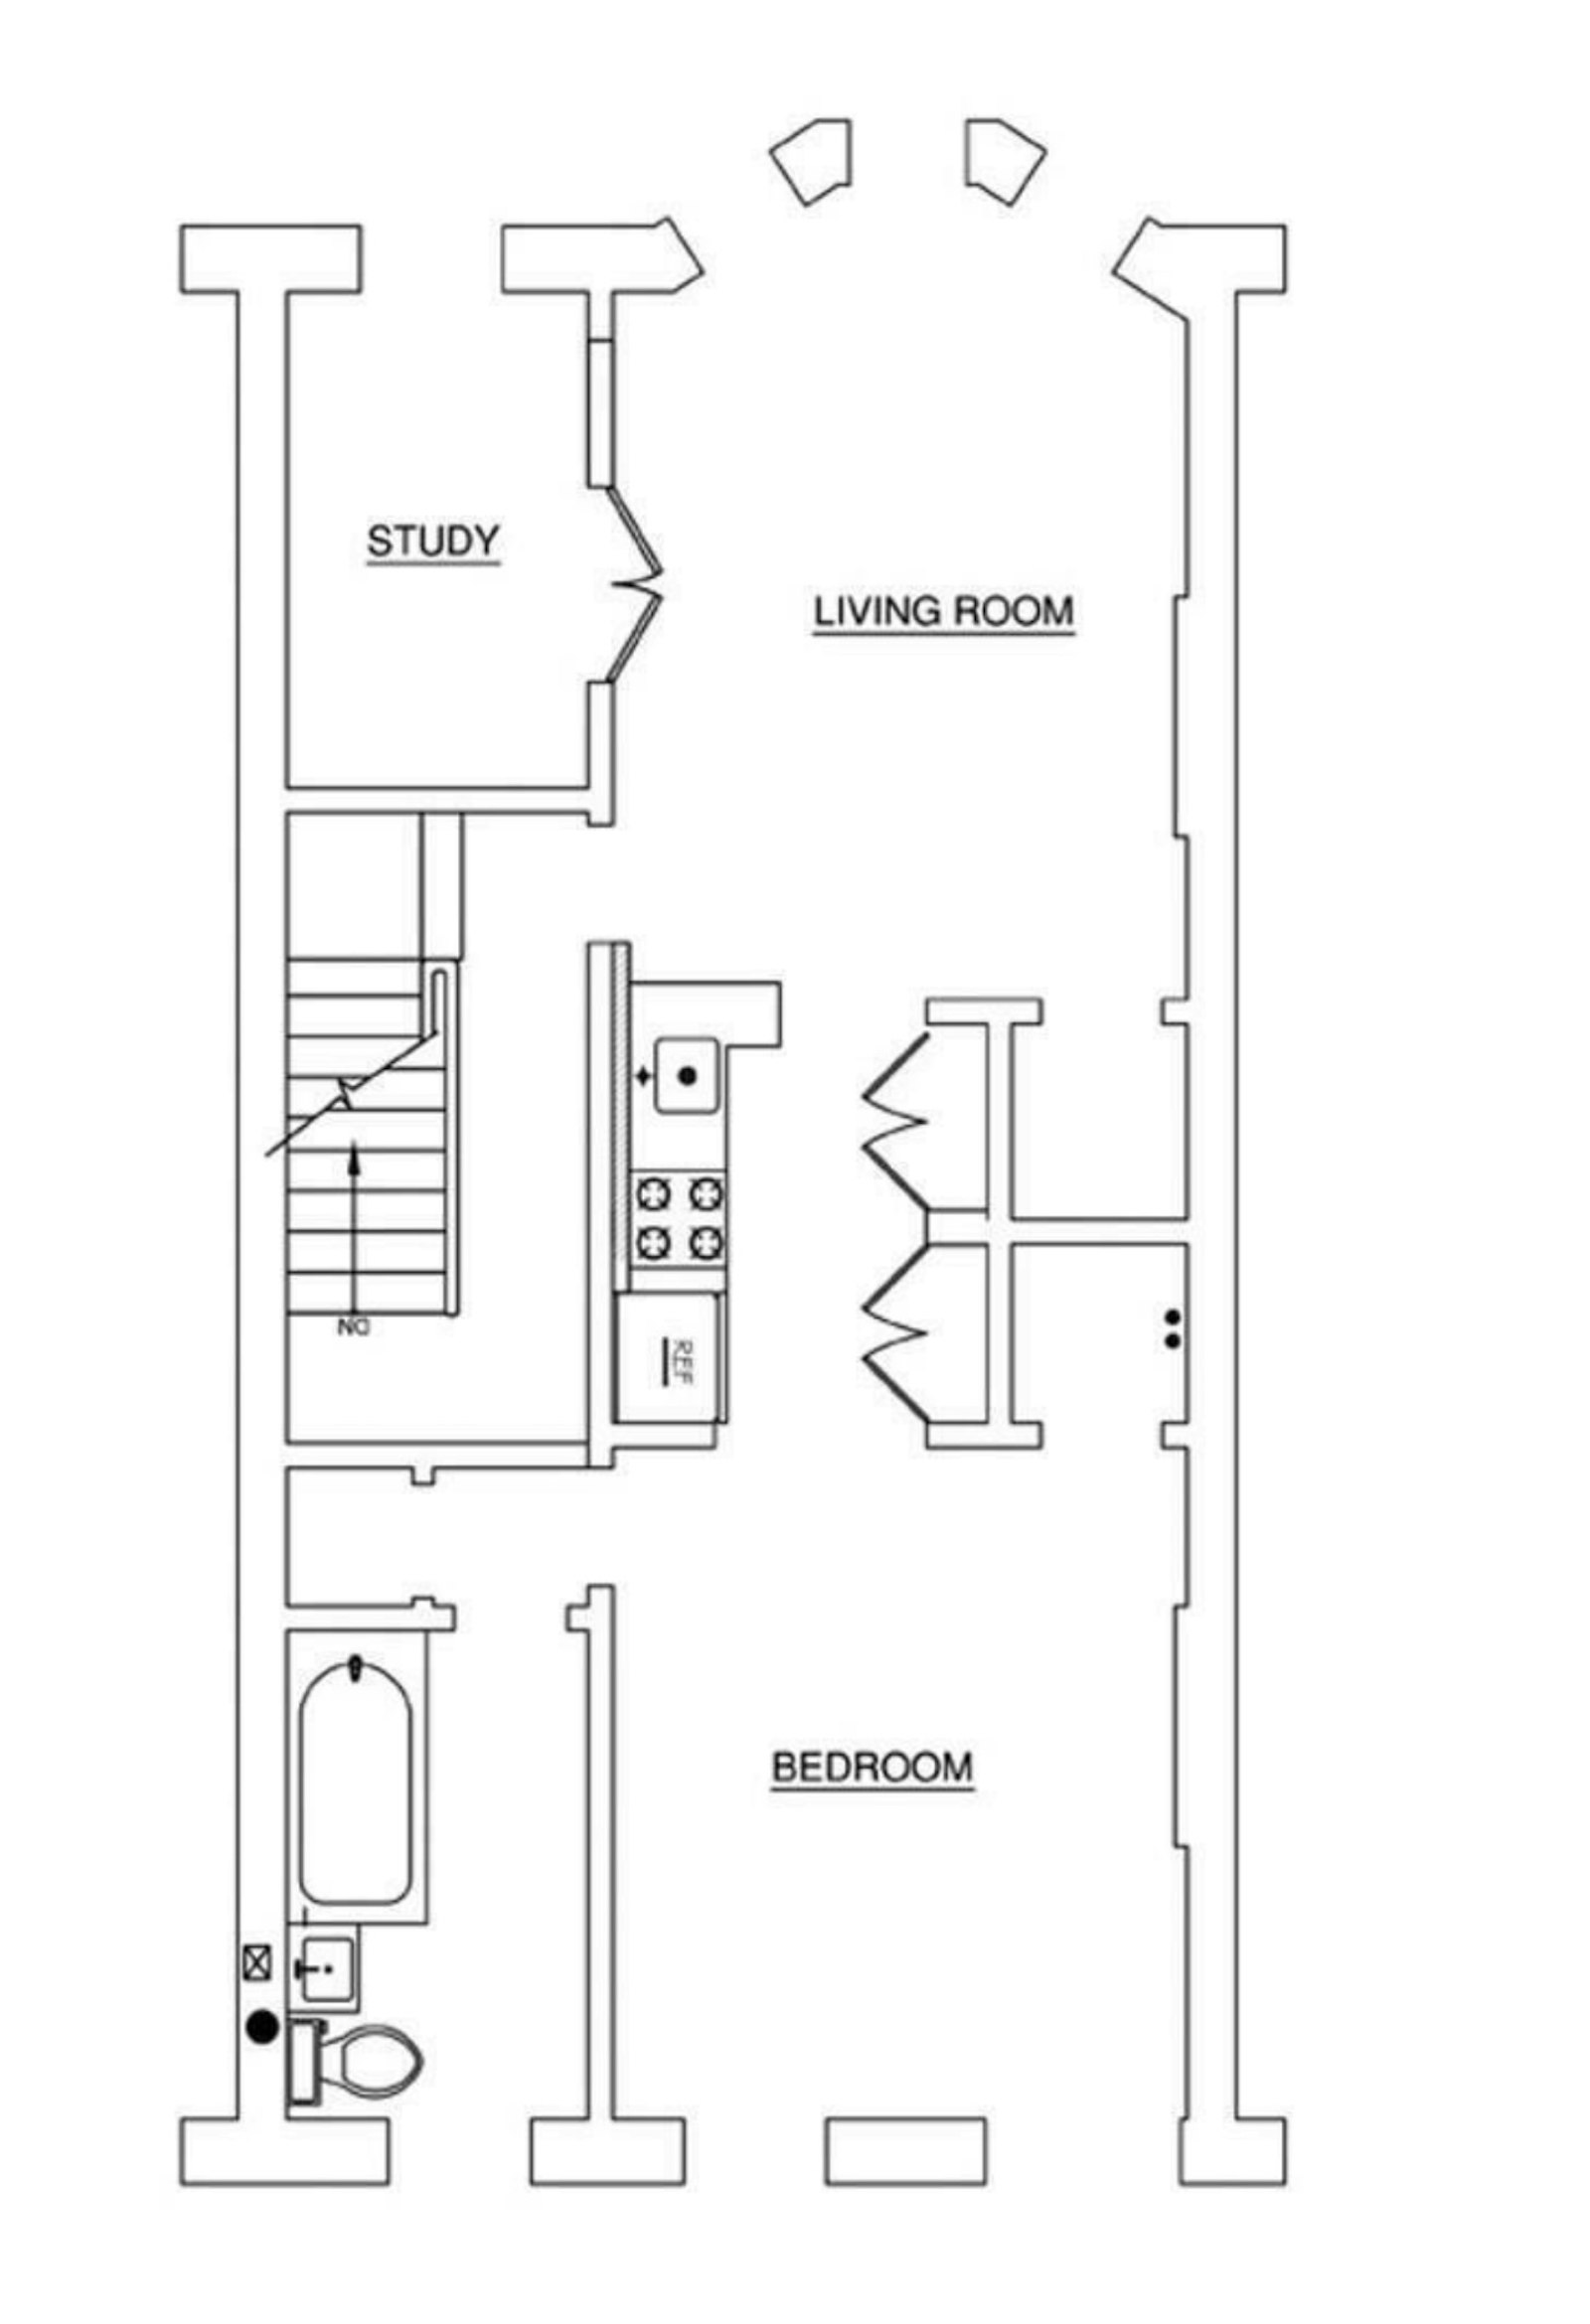 Floorplan for 116 Bainbridge Street, 2